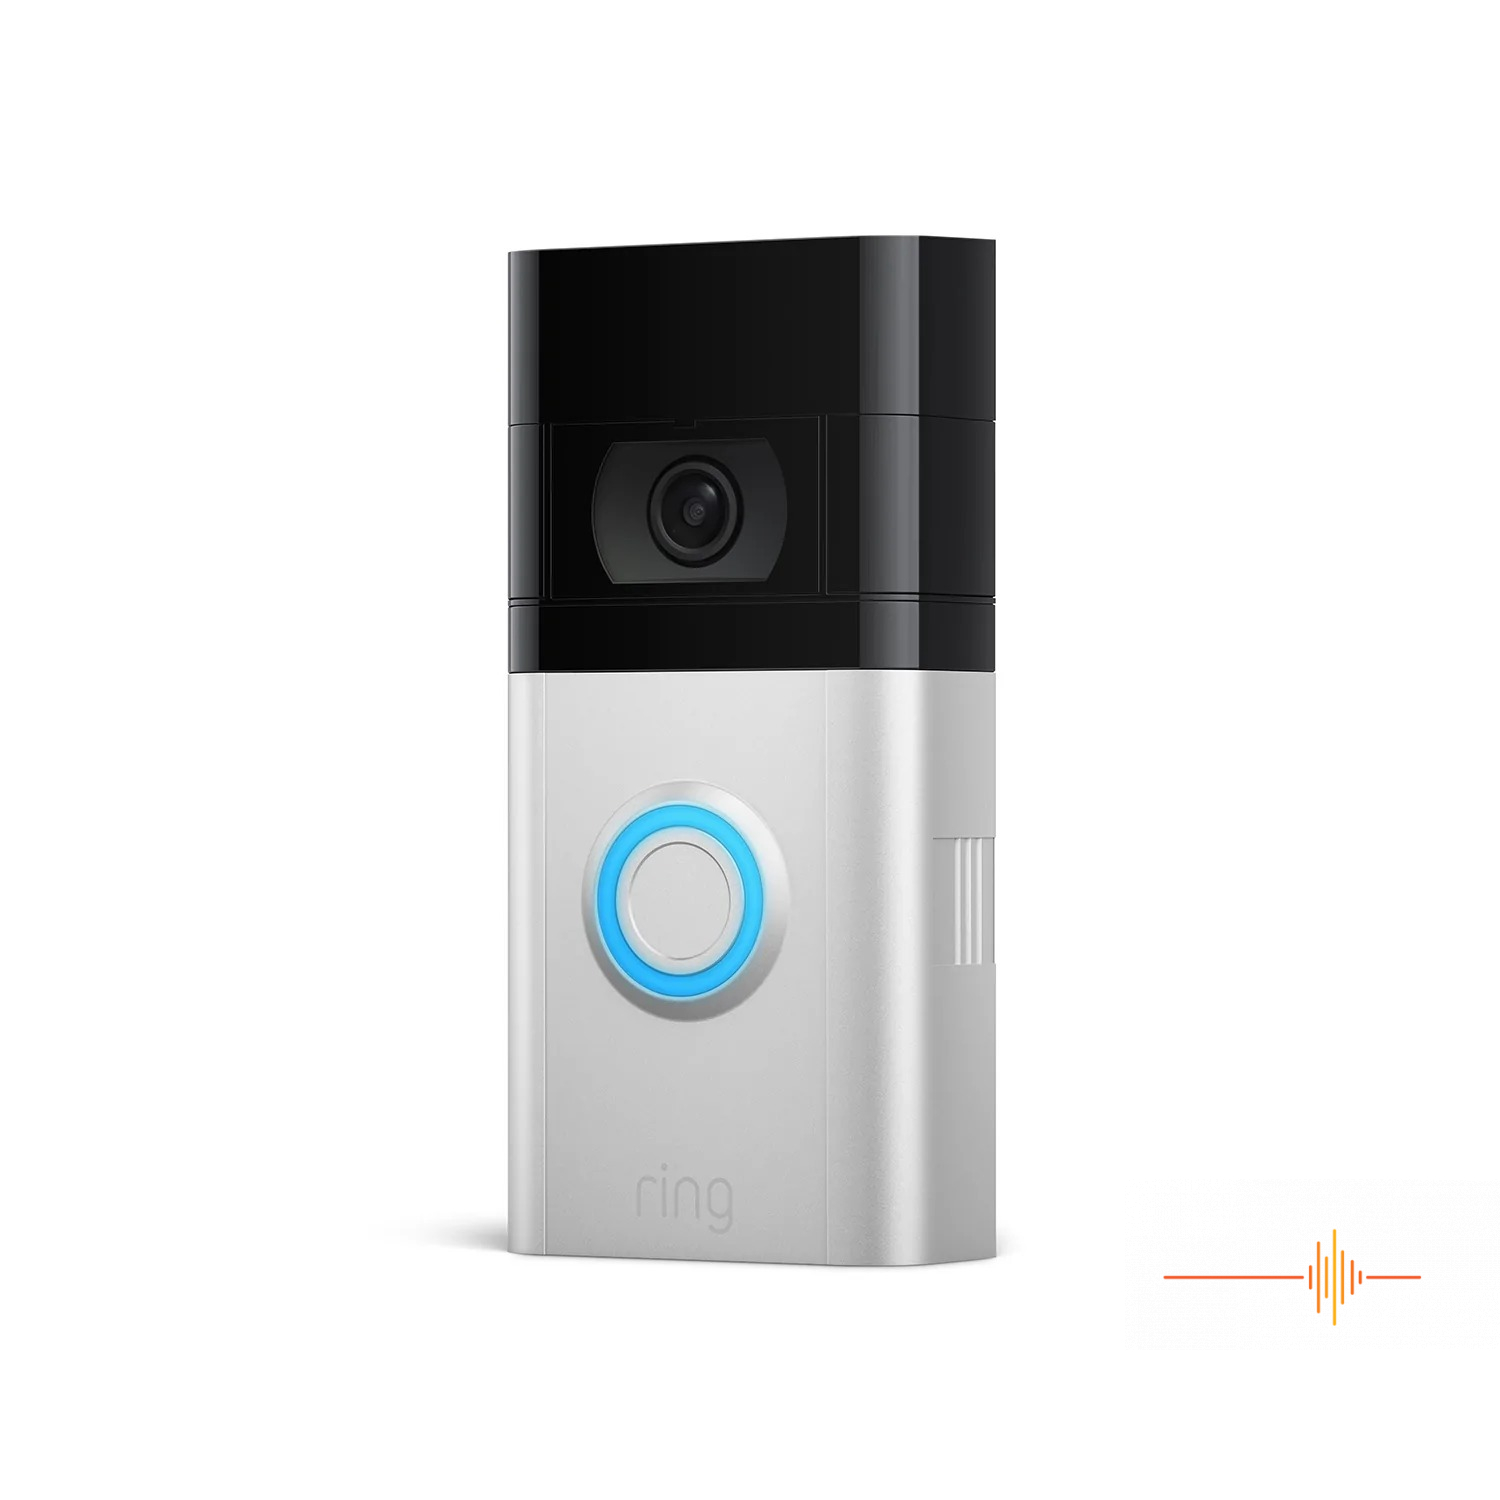 G4 Protect doorbell - wifi not in range | Ubiquiti Community